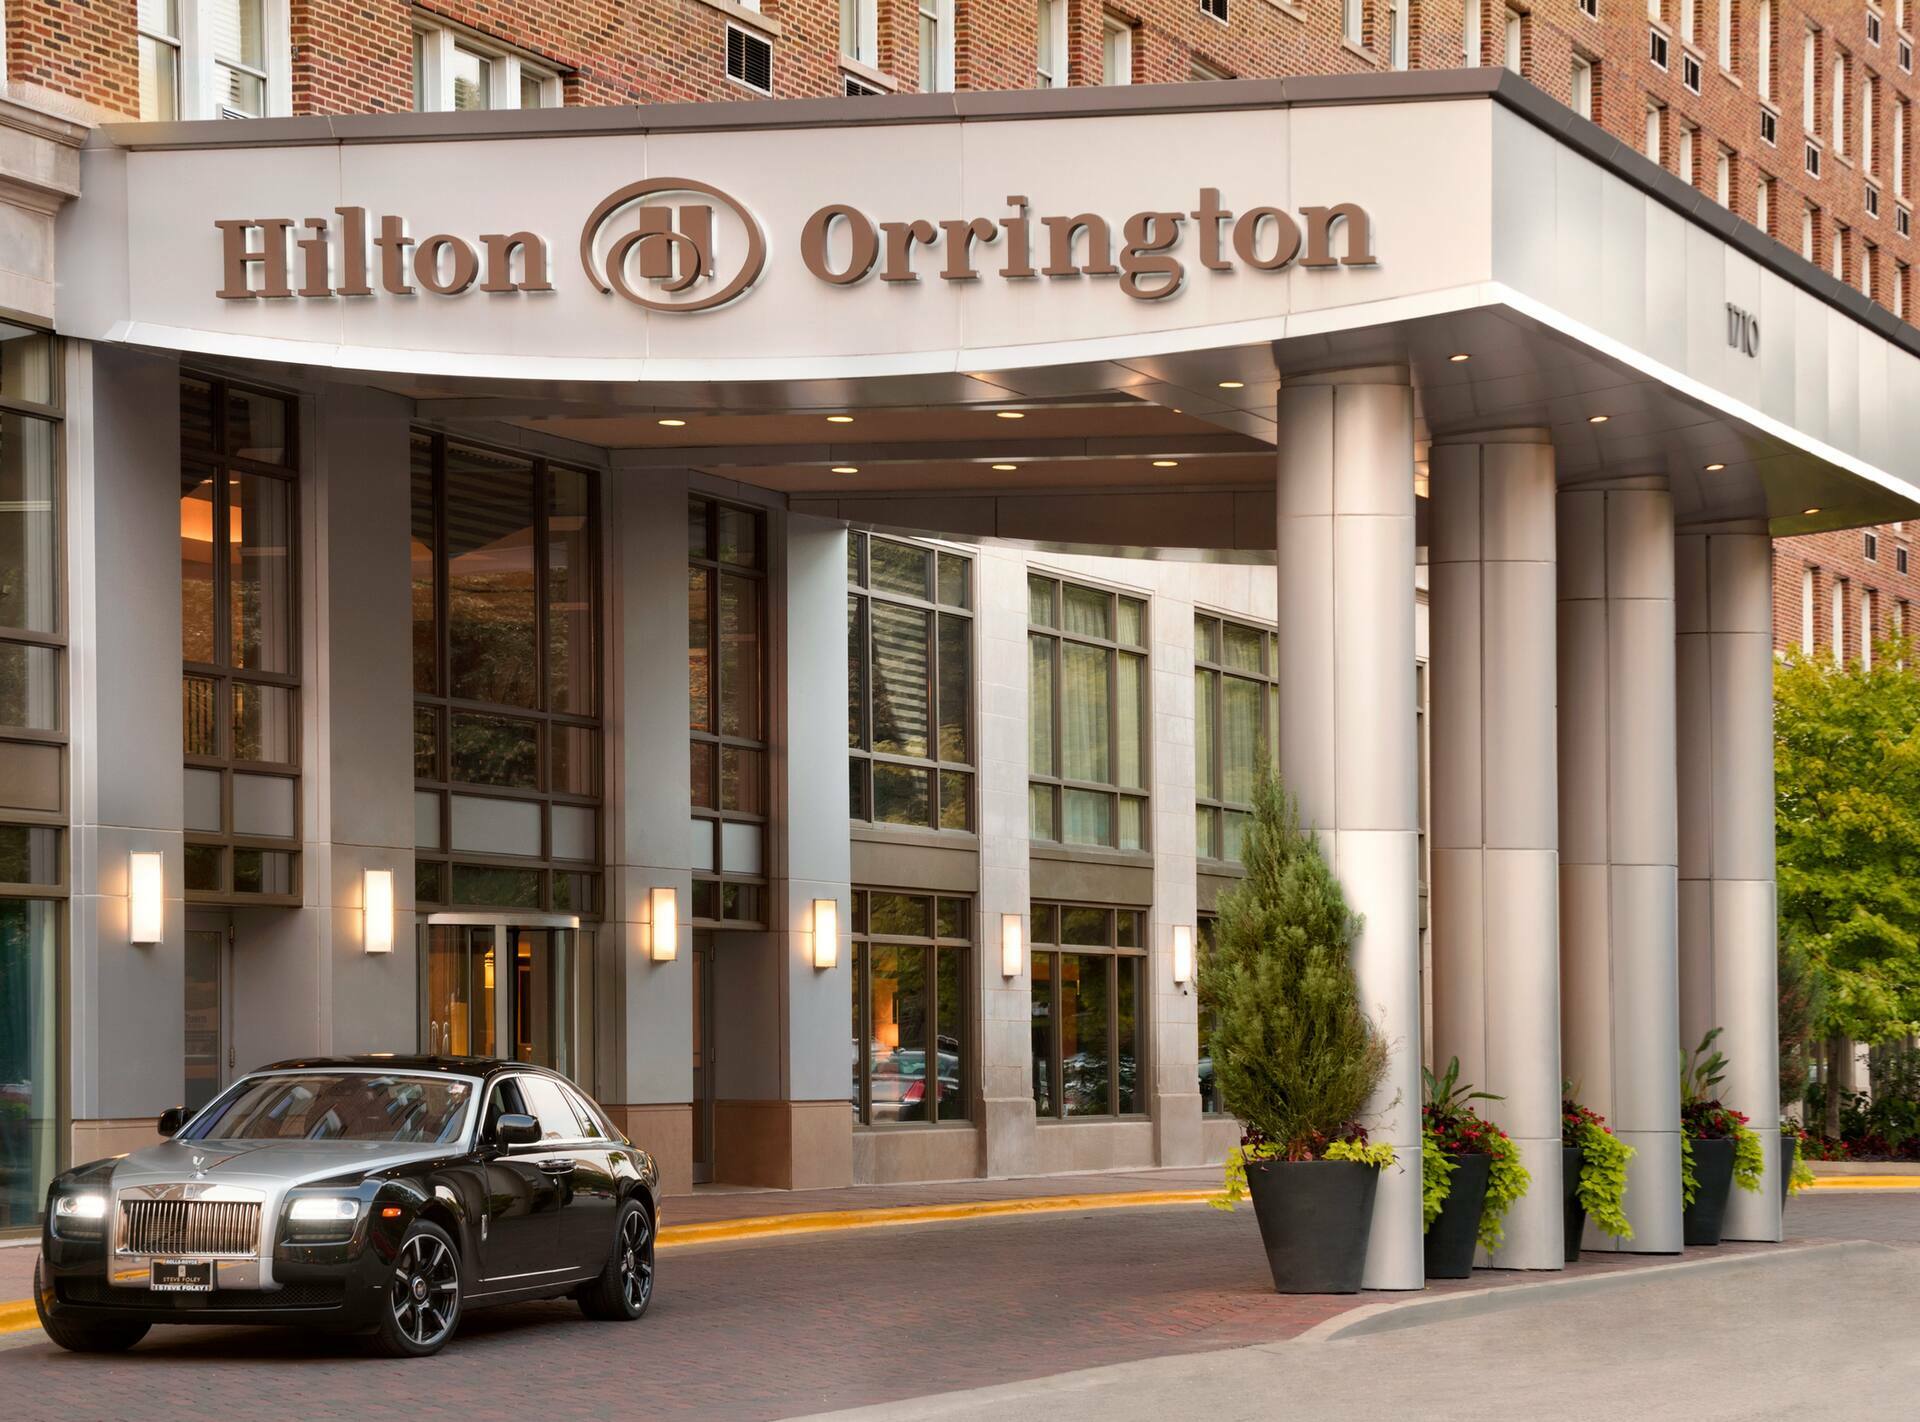 Photo of Hilton Orrington/Evanston, Evanston, IL